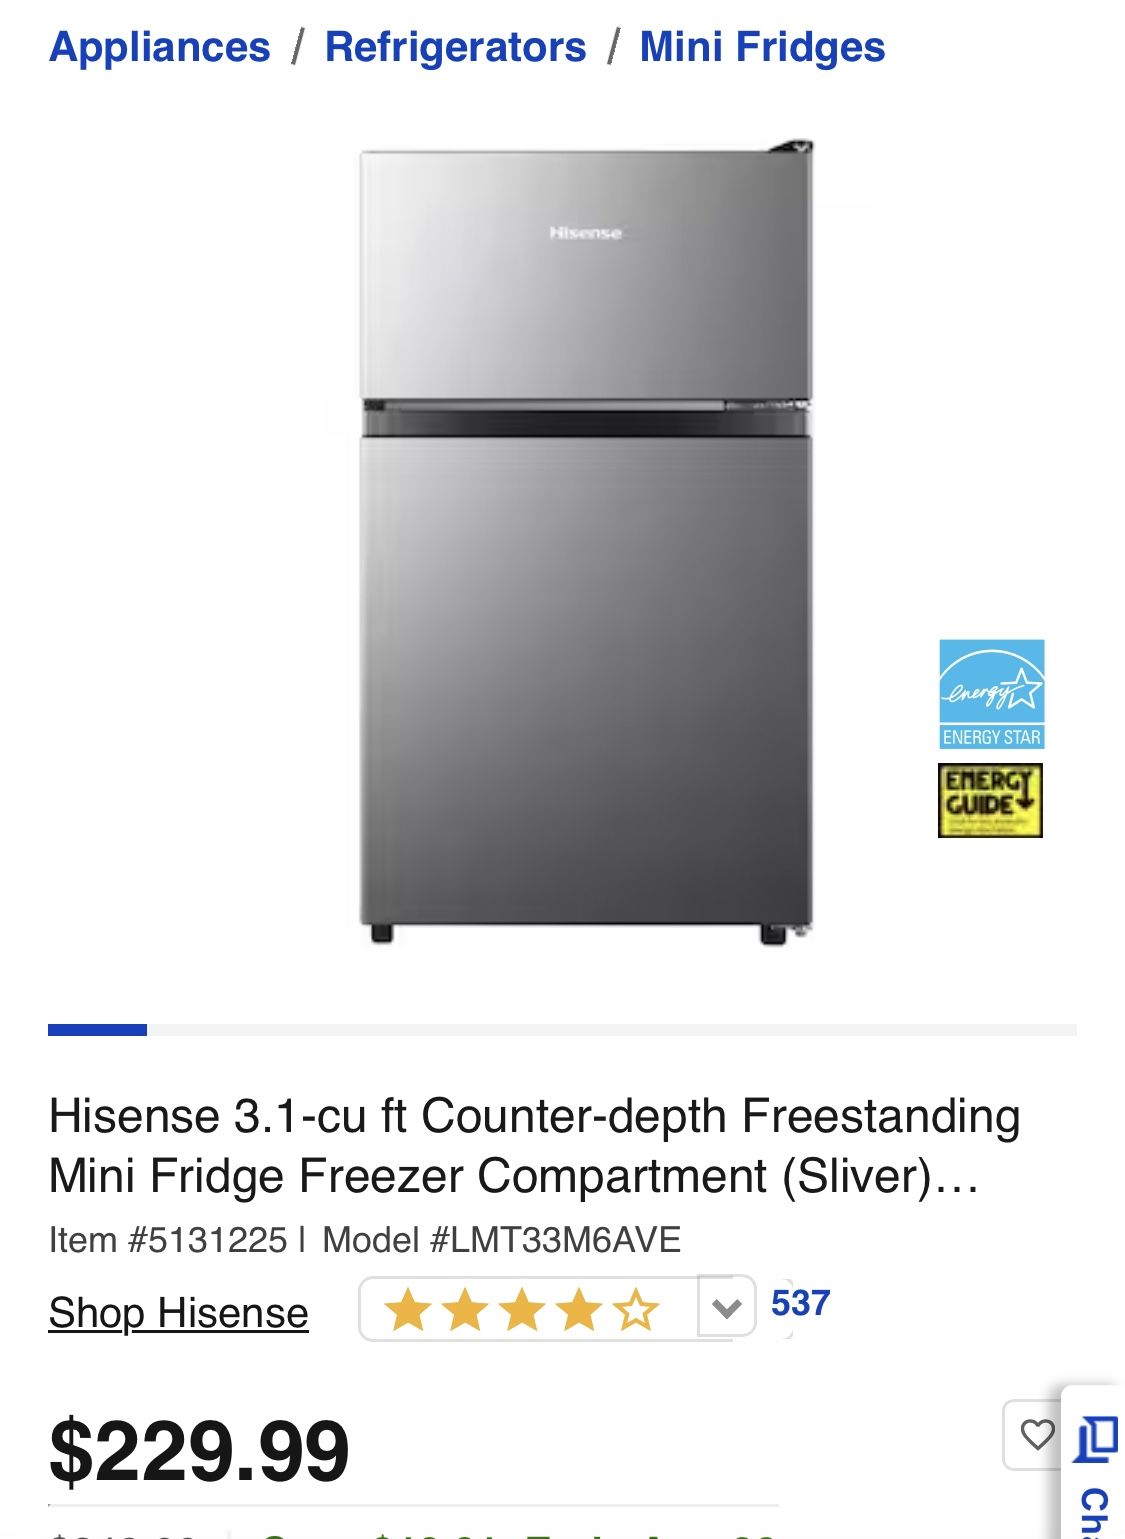 Hisense 3.1-cu ft Counter-depth Freestanding Mini Fridge Freezer  Compartment (Sliver) ENERGY STAR in the Mini Fridges department at